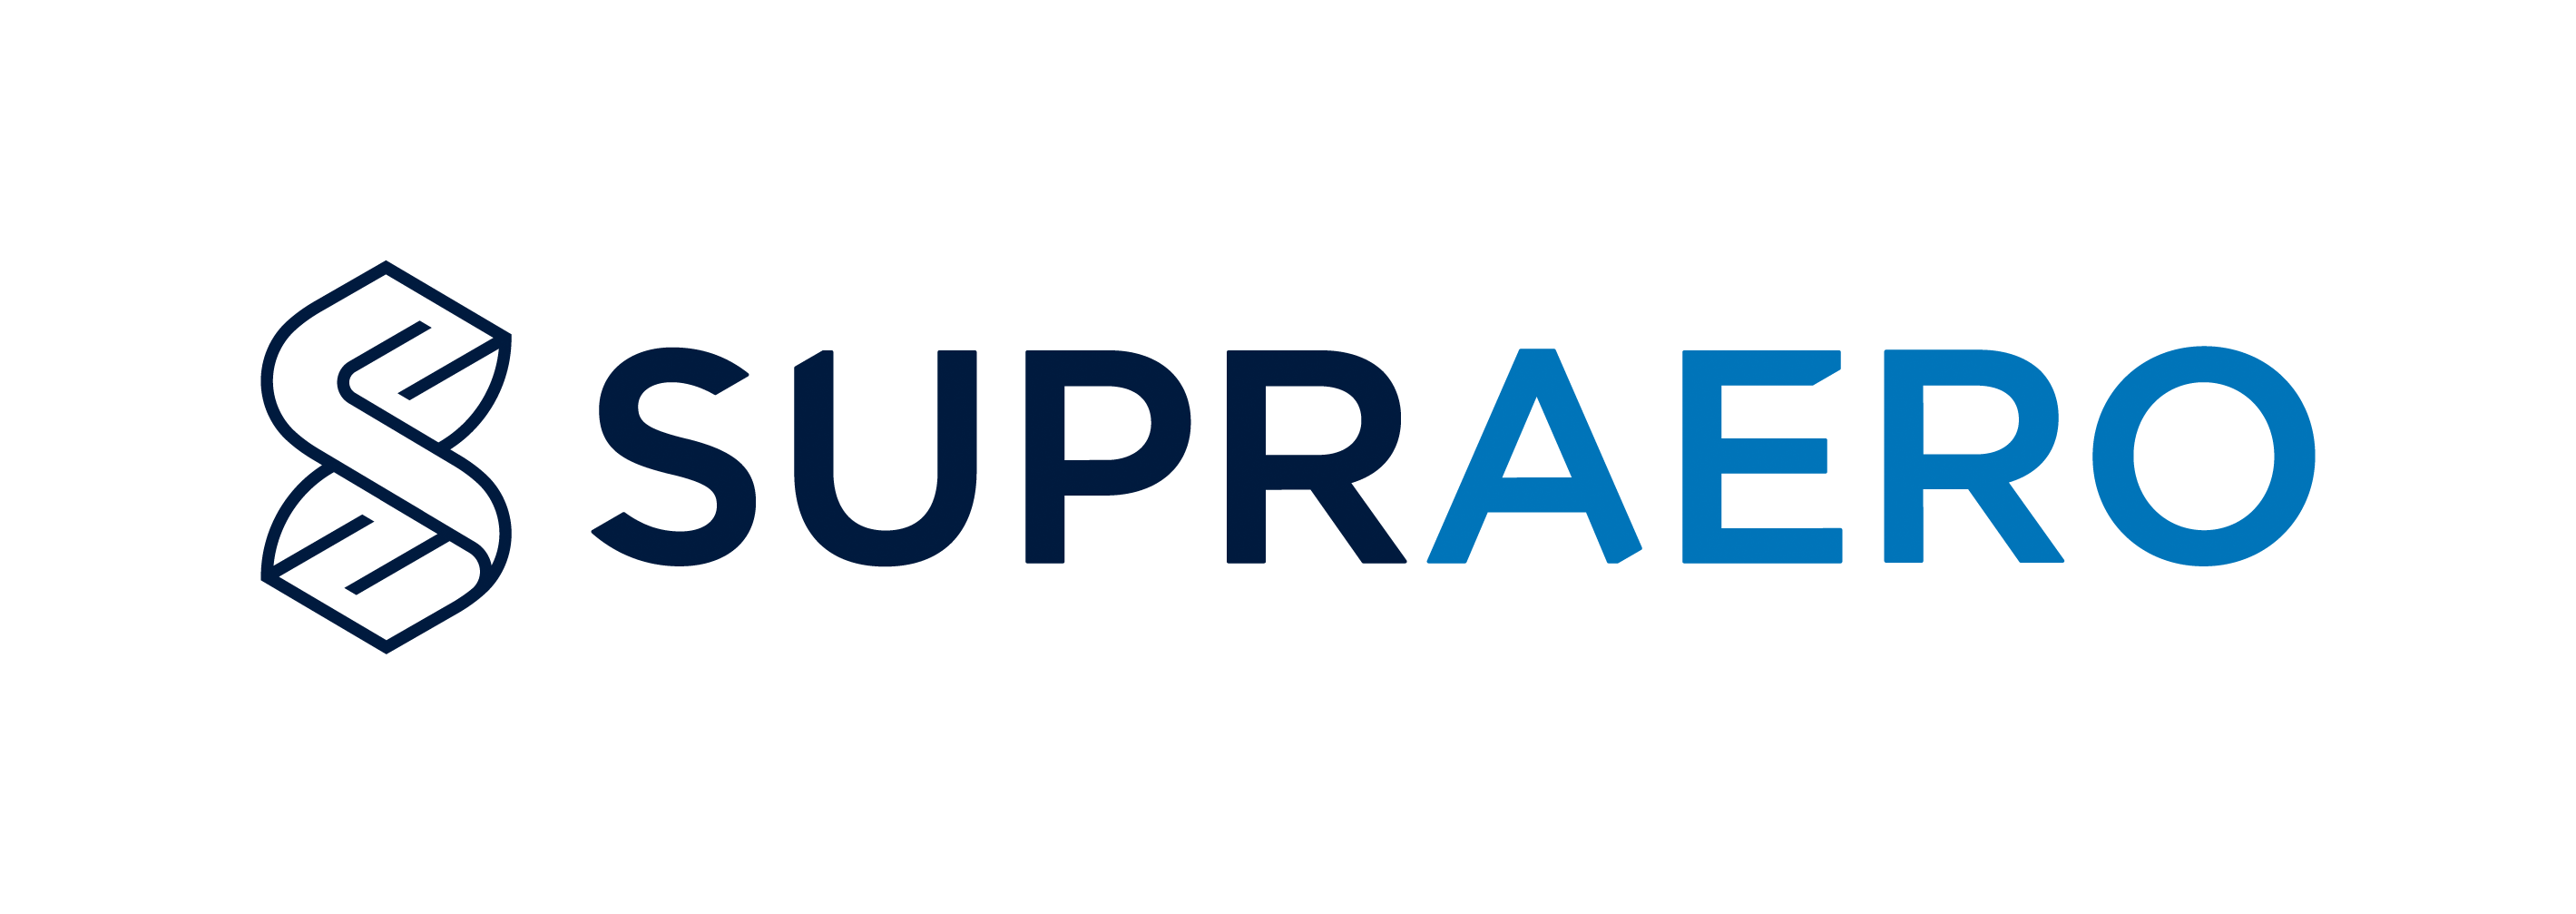 Logo the brand Supraero